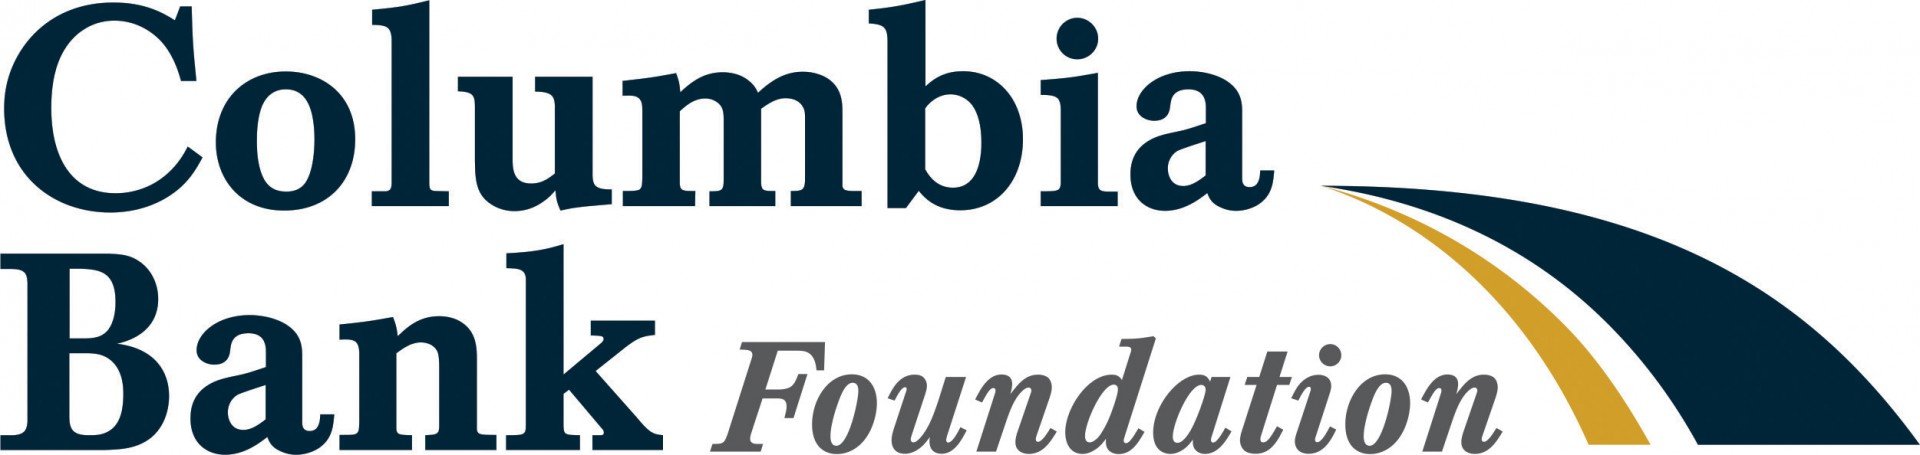 CB_Foundations_Logo.jpg